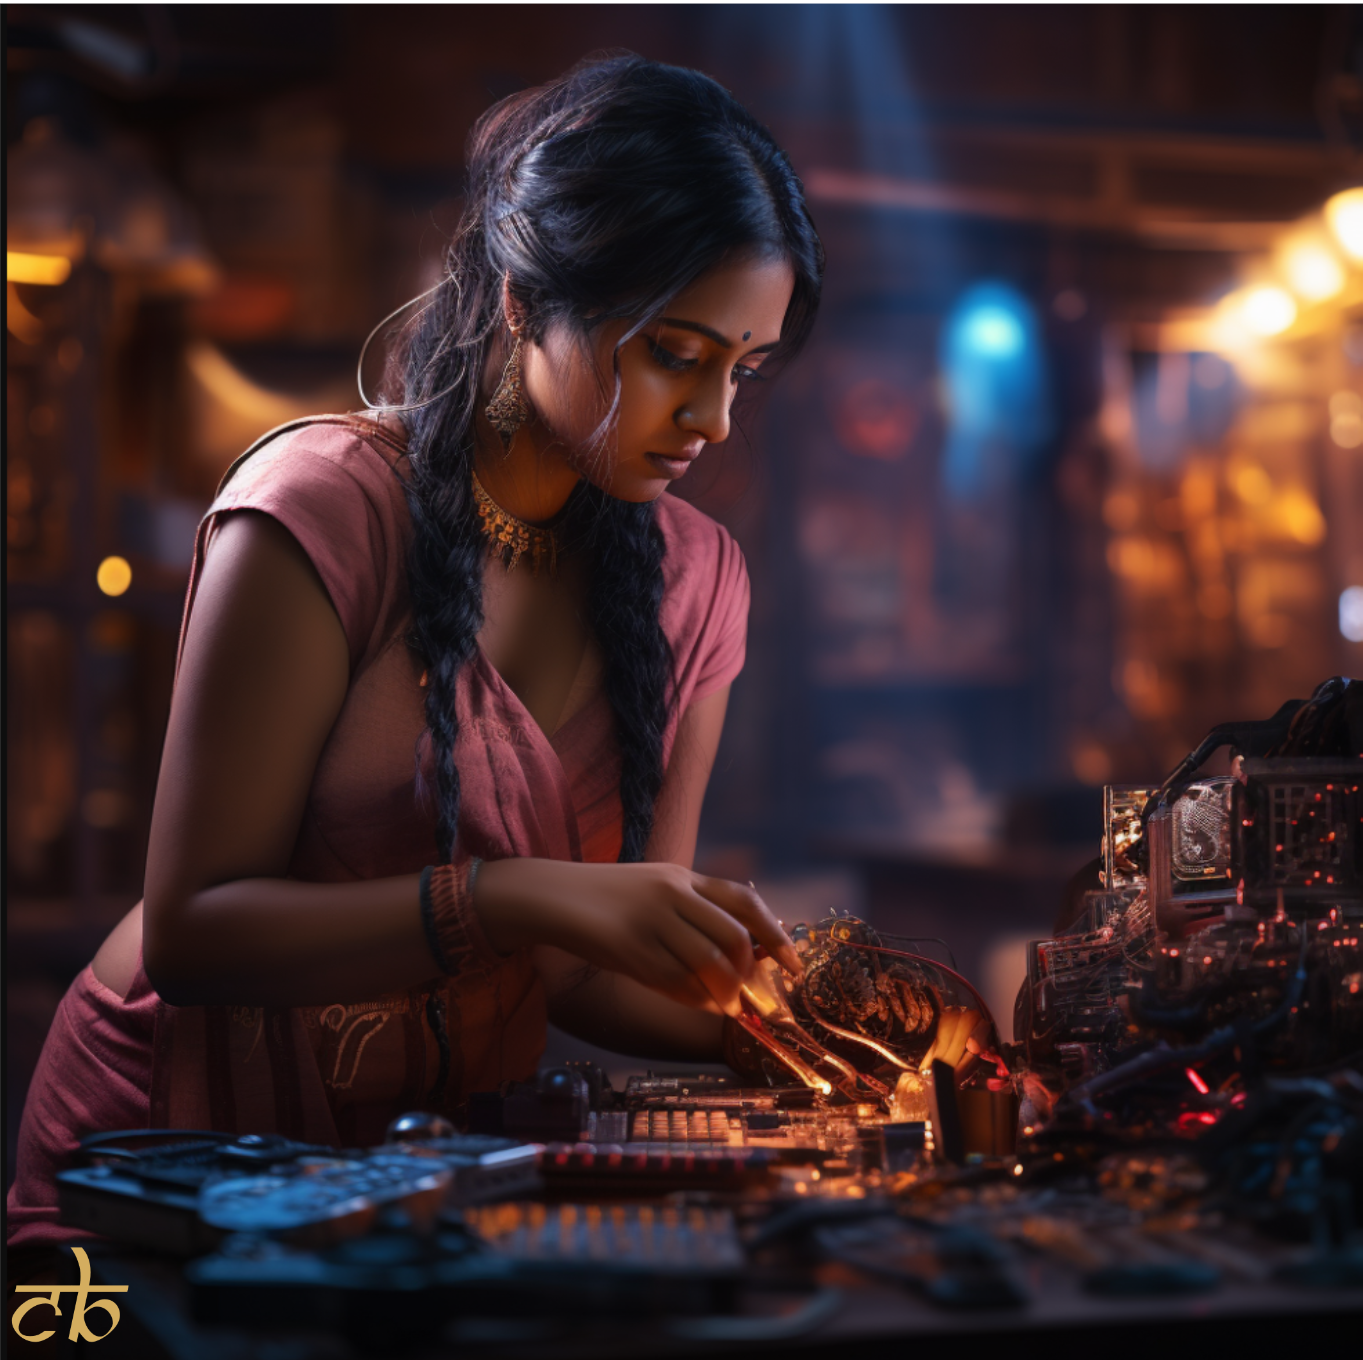 CoinBharat artwork of a beautiful Indian woman working on GPU hardware in a futuristic setting